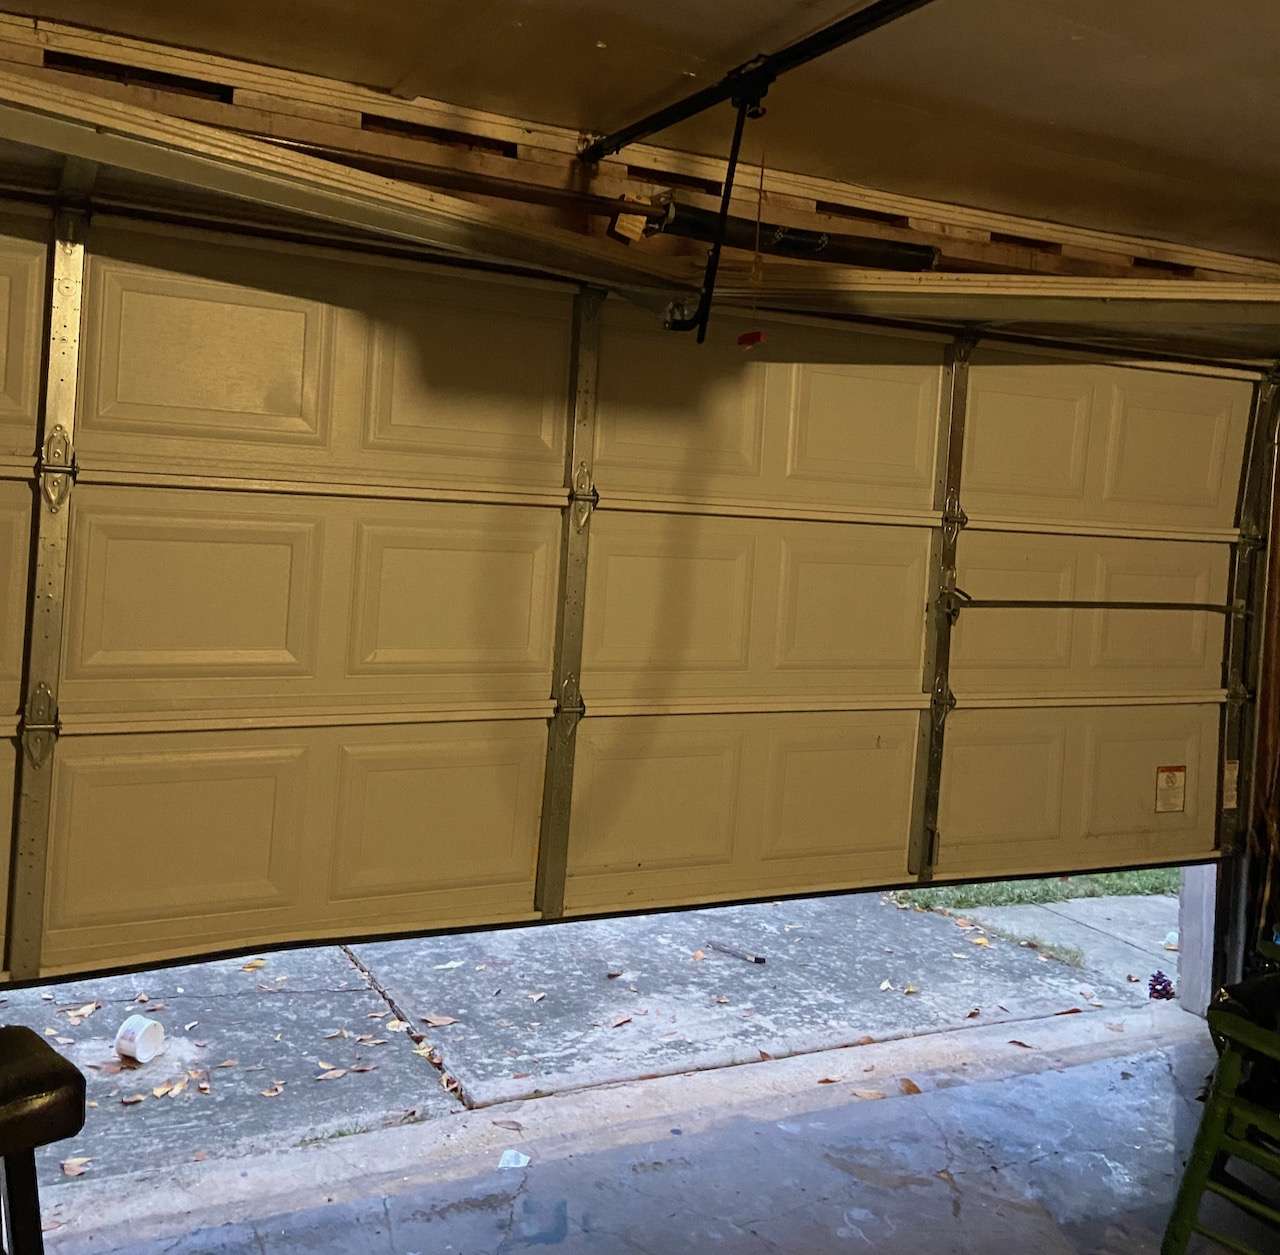 Top section and strut bent on double car width garage door due to homeowner closing garage door on a stool in the garage.